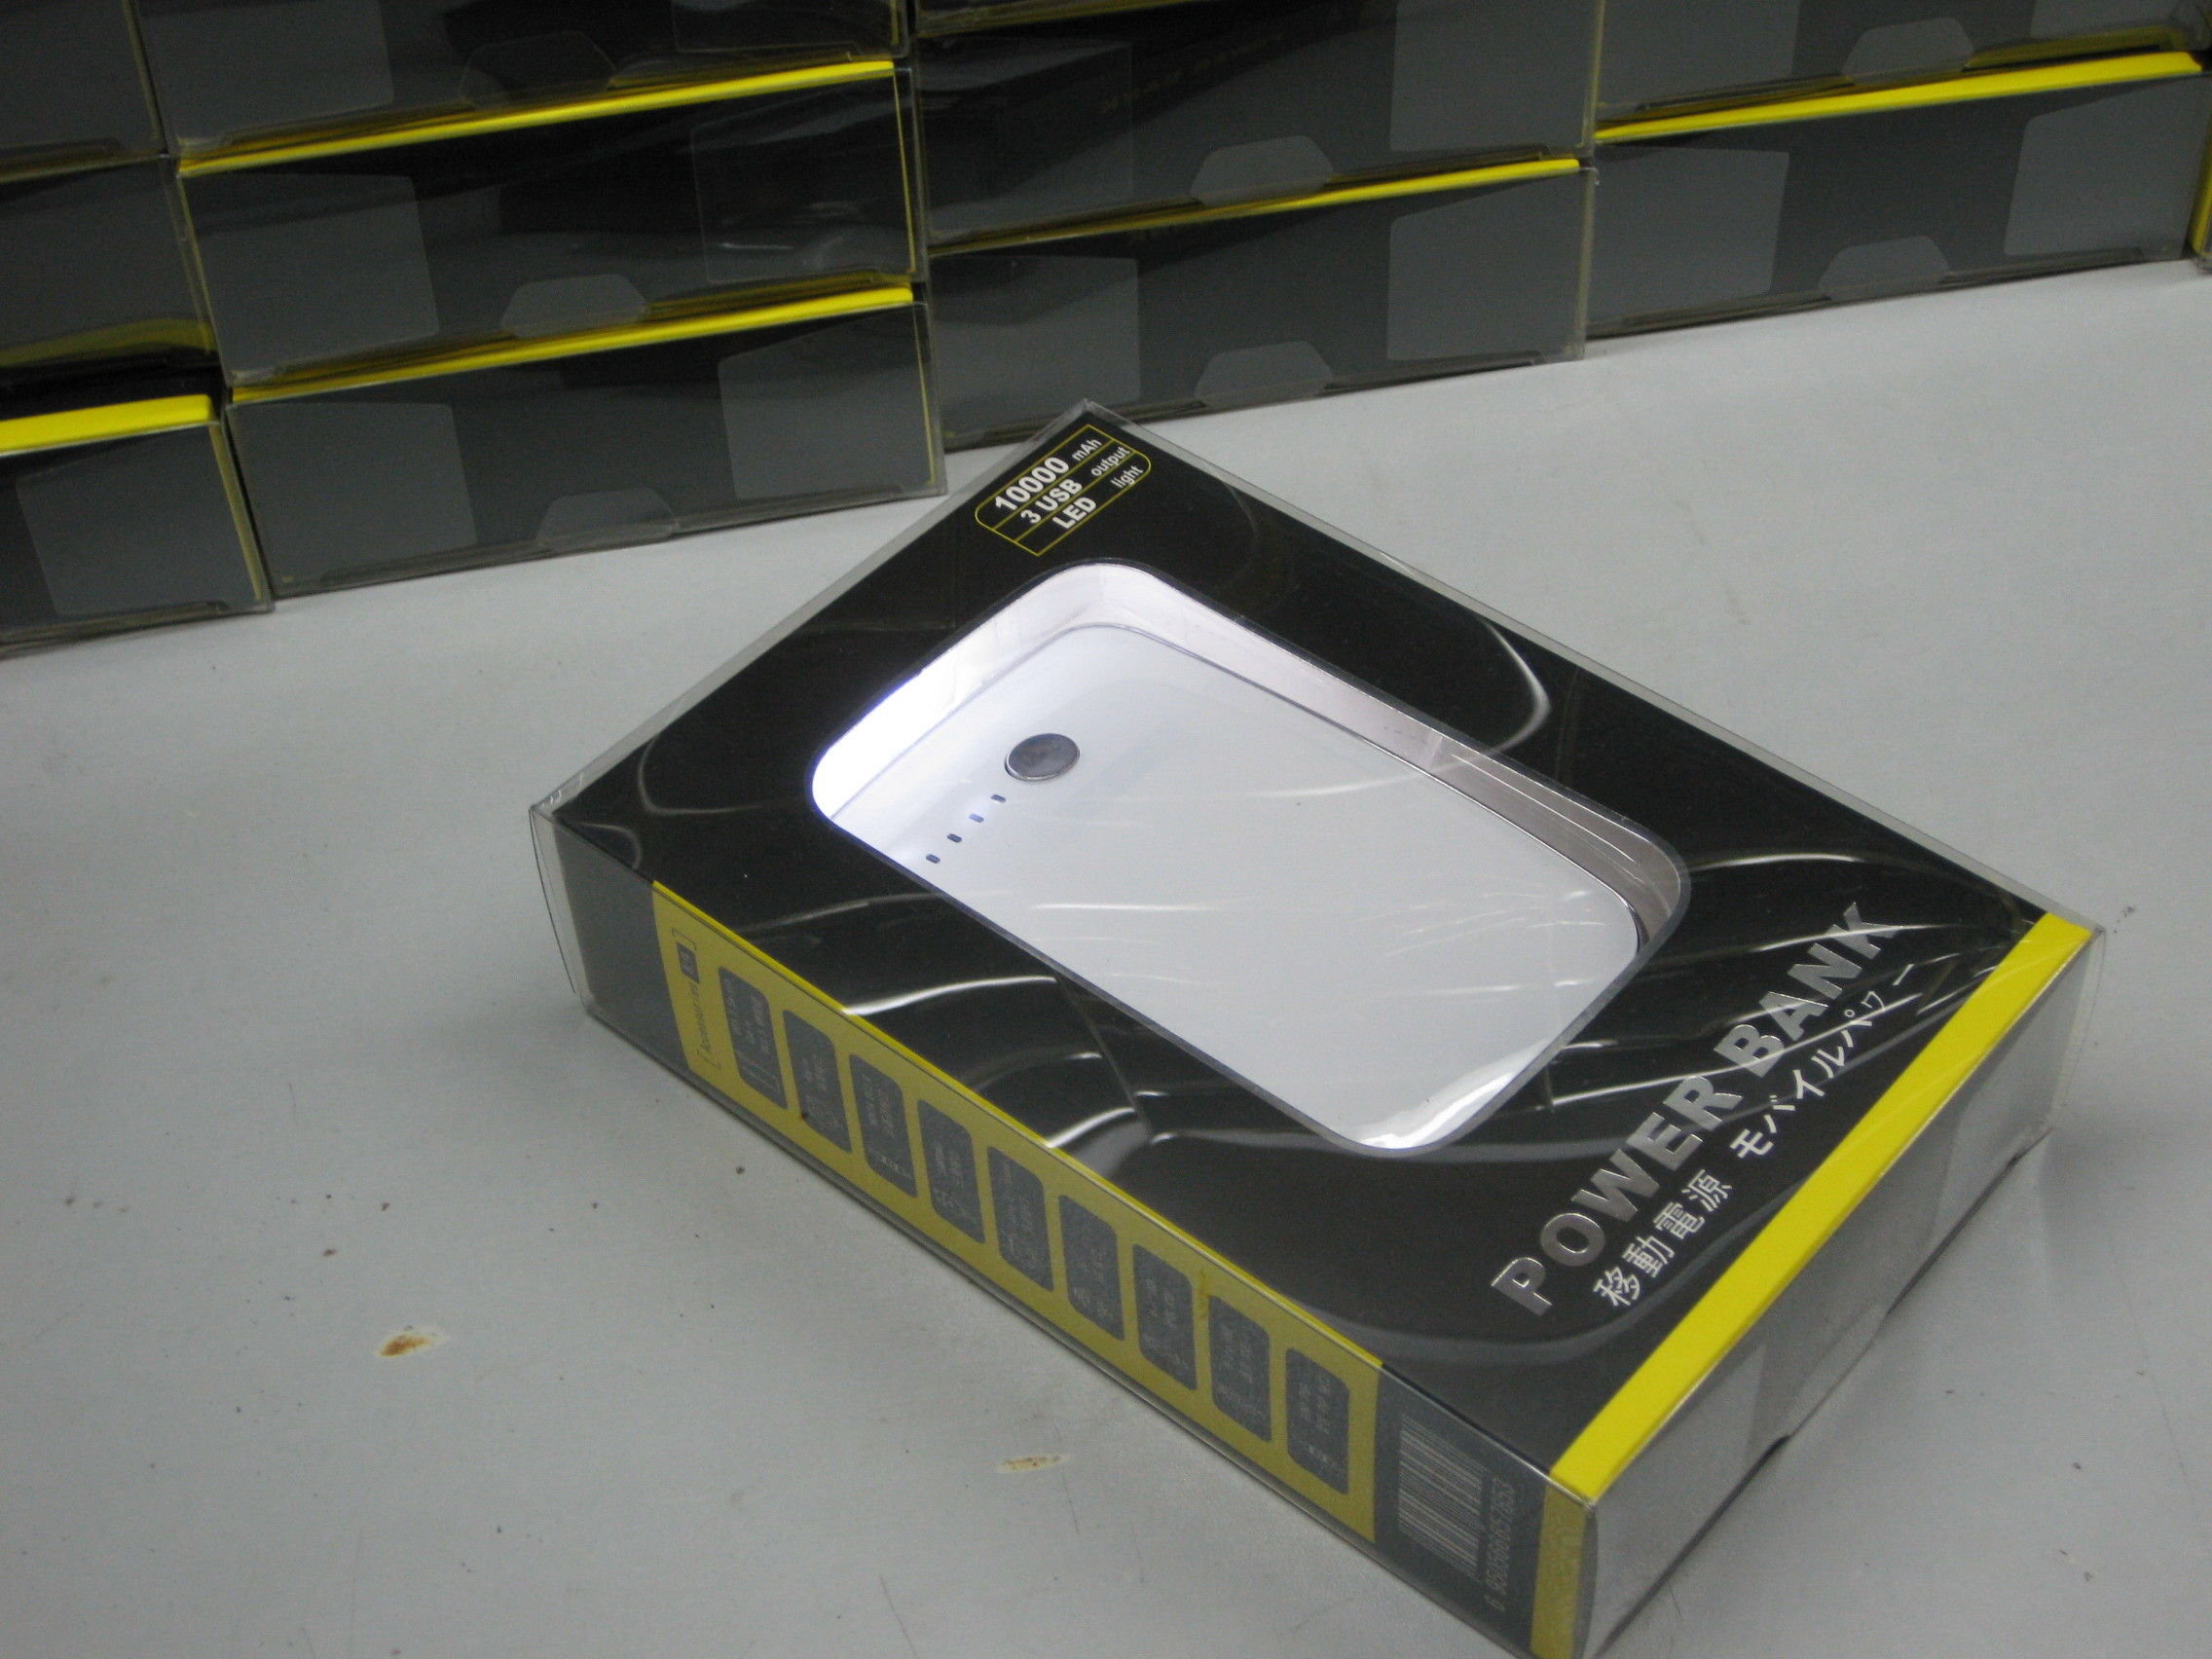 1500mAh Portabel Daya Baterai Paket jumpstarter inverter untuk P1000 Iphone